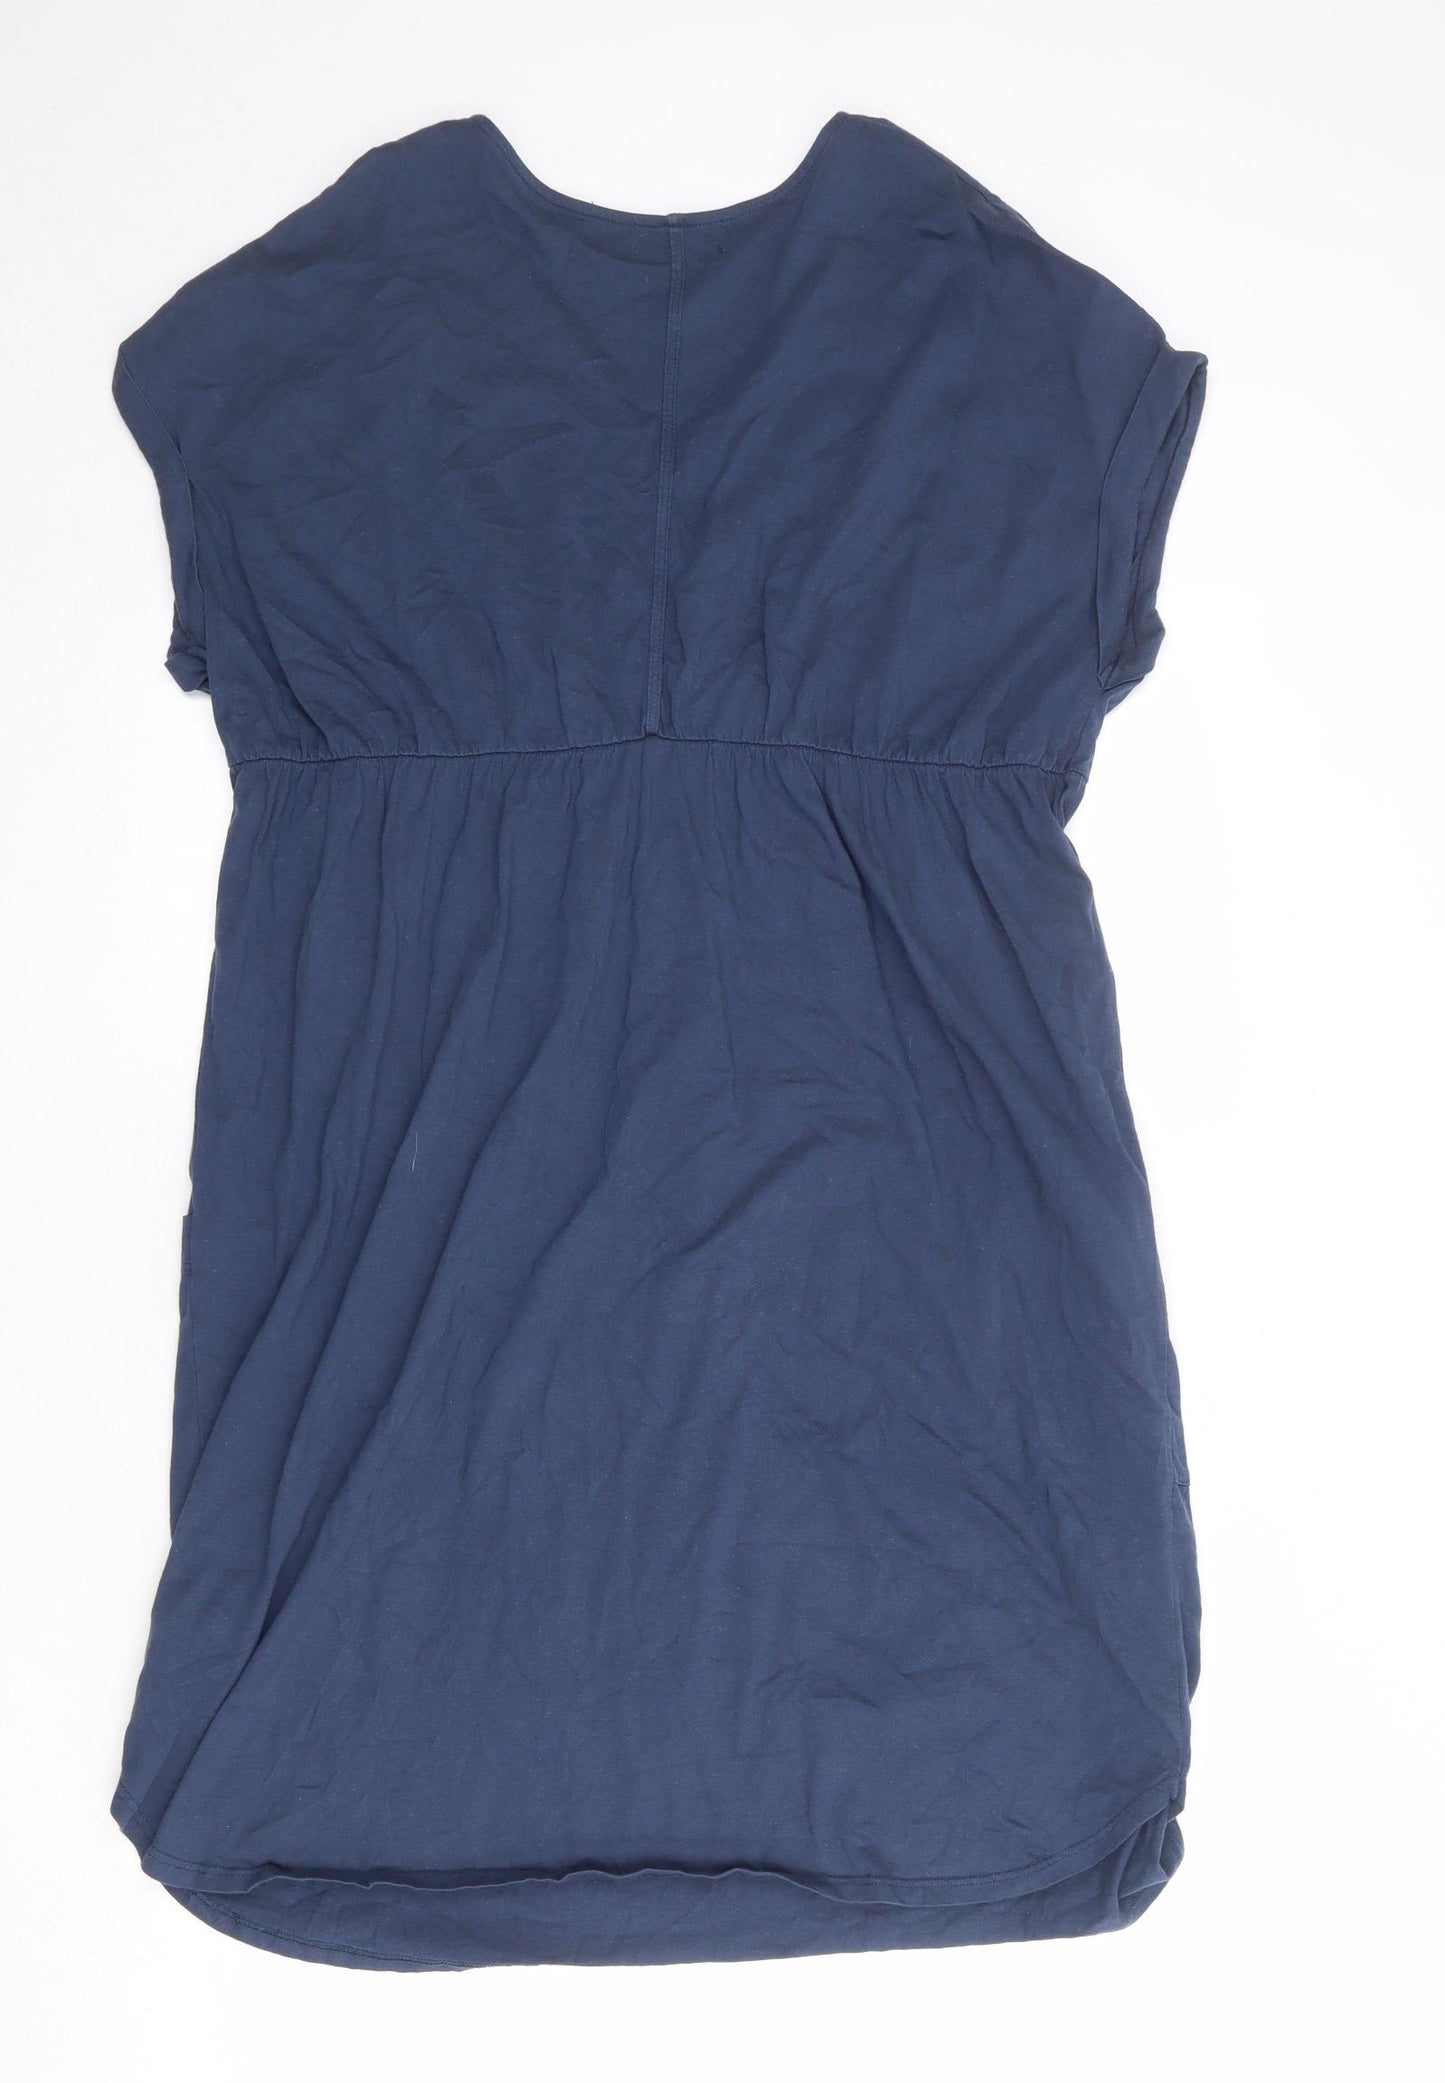 NEXT Womens Blue 100% Cotton T-Shirt Dress Size 18 V-Neck Pullover